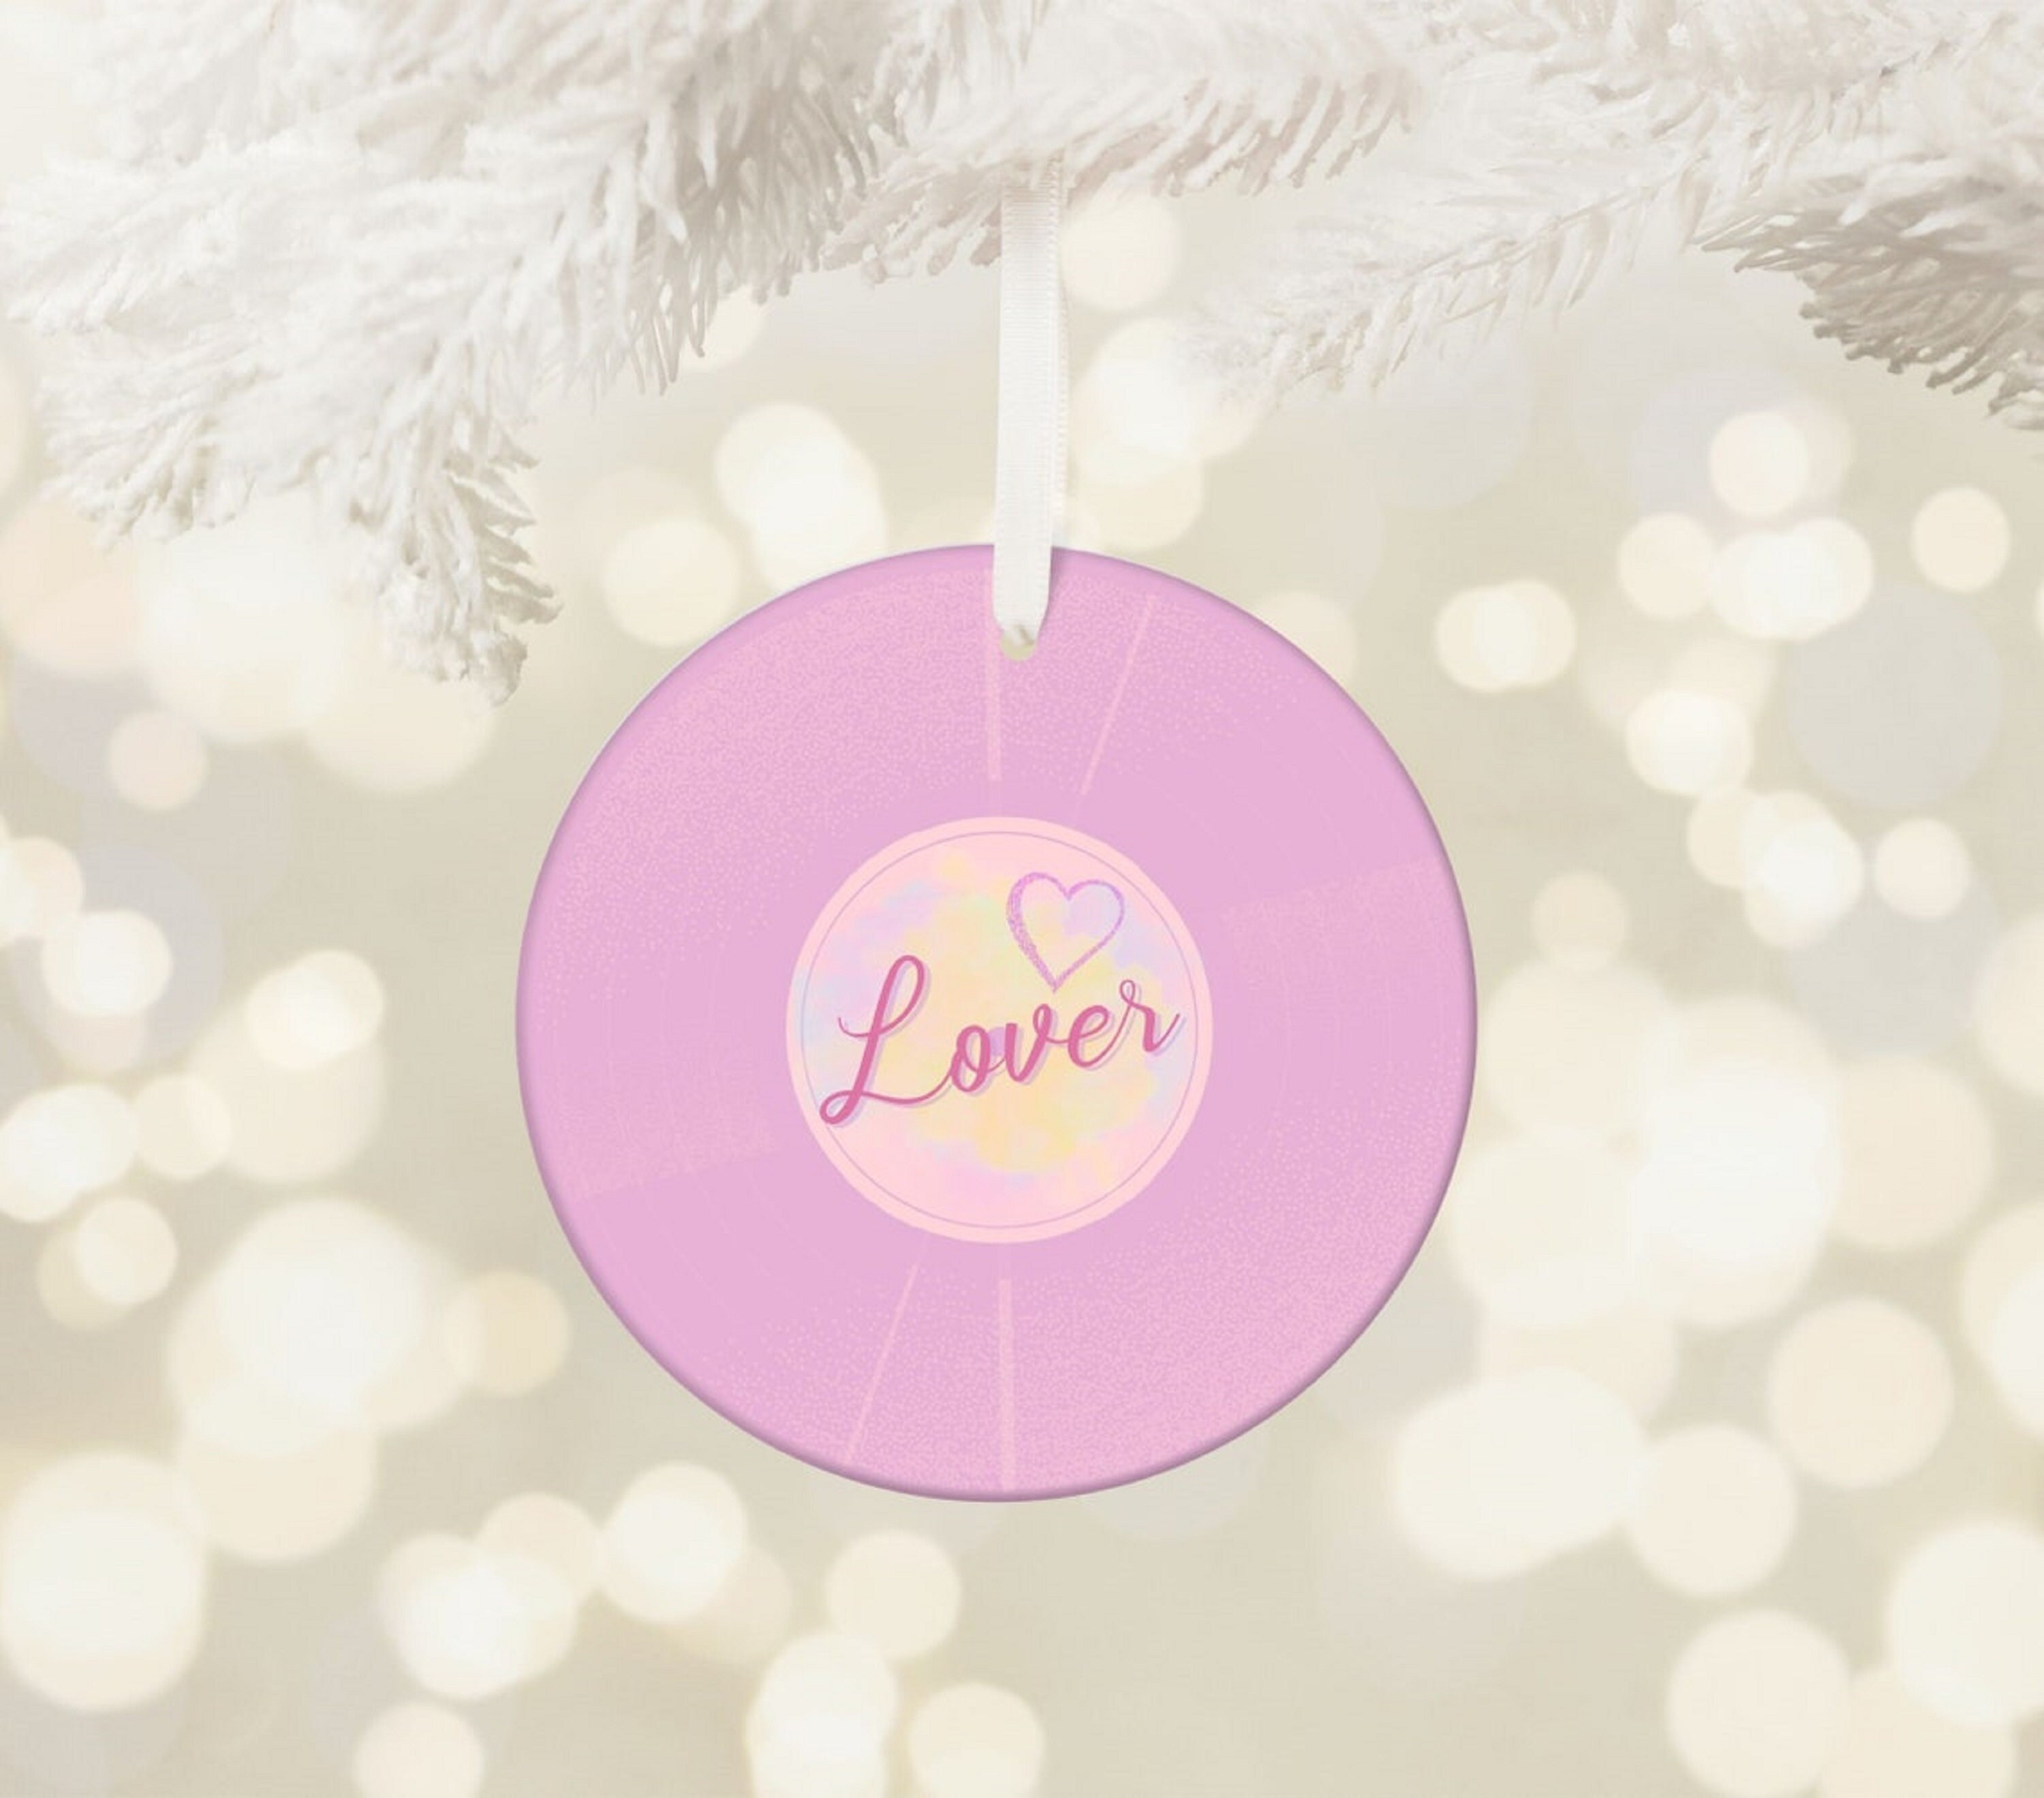 Discover Lover Merry Swiftmas The Eras Tour Taylor Christmas Ornament